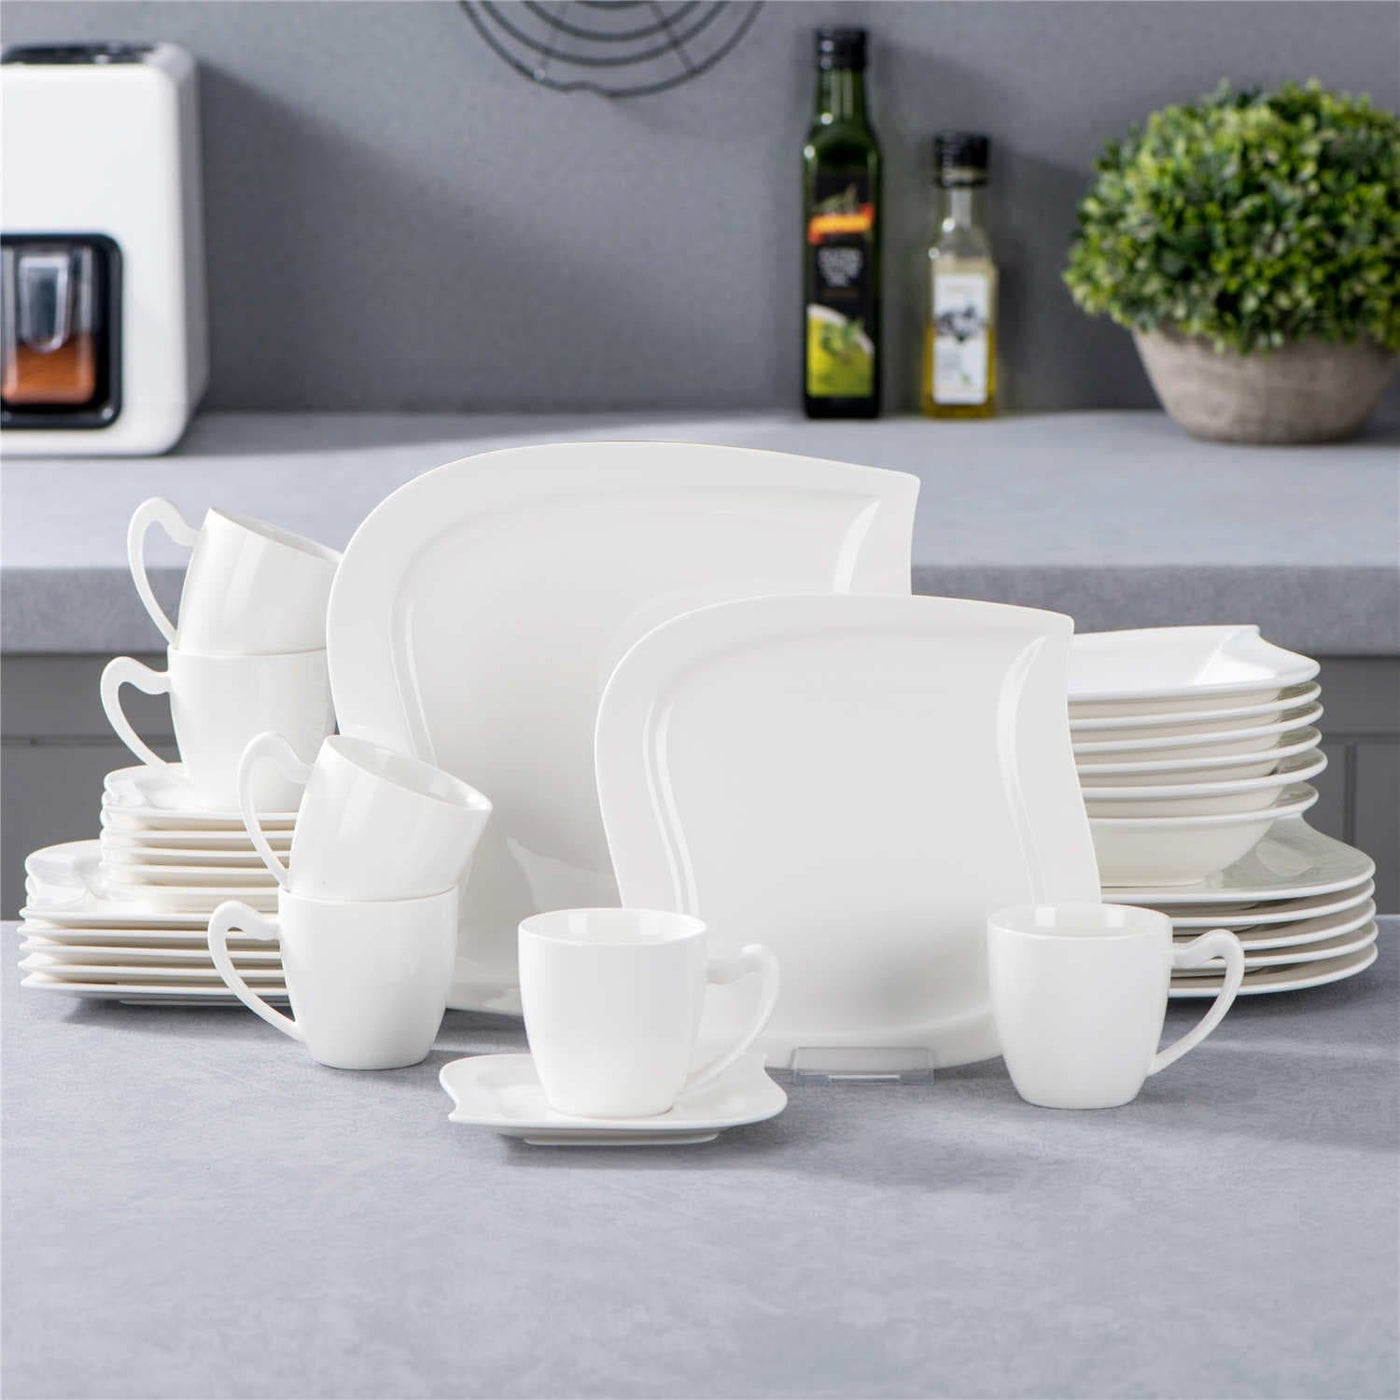 MALACASA Elisa 60-Piece Porcelain Dinner Set with Coffee Cups